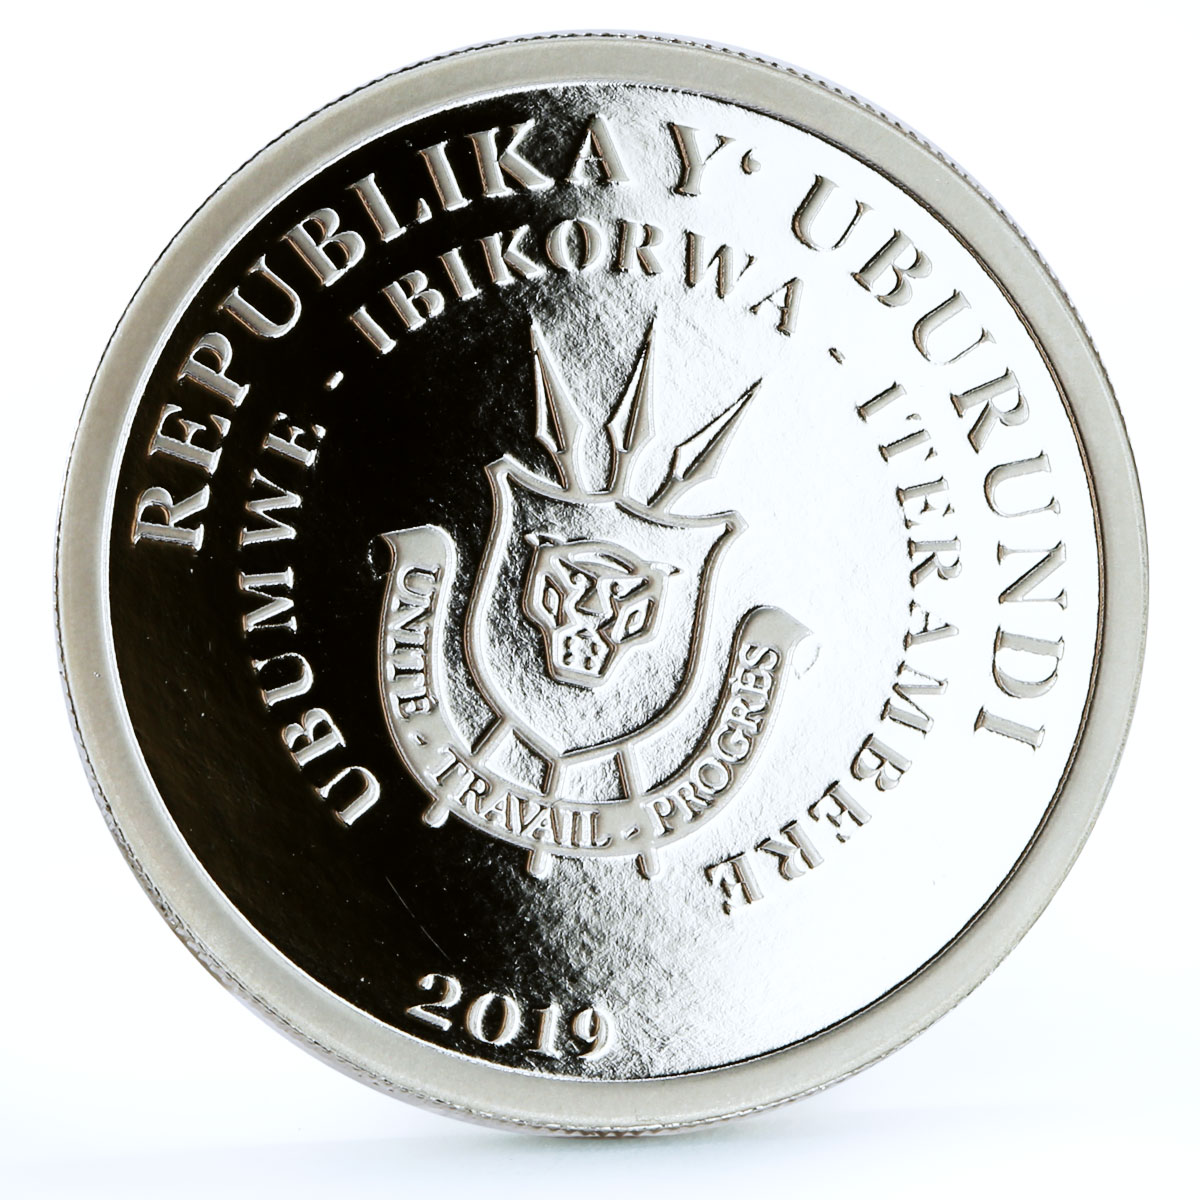 Burundi 25 francs African Big Five Lion Animals Fauna colored silver coin 2019